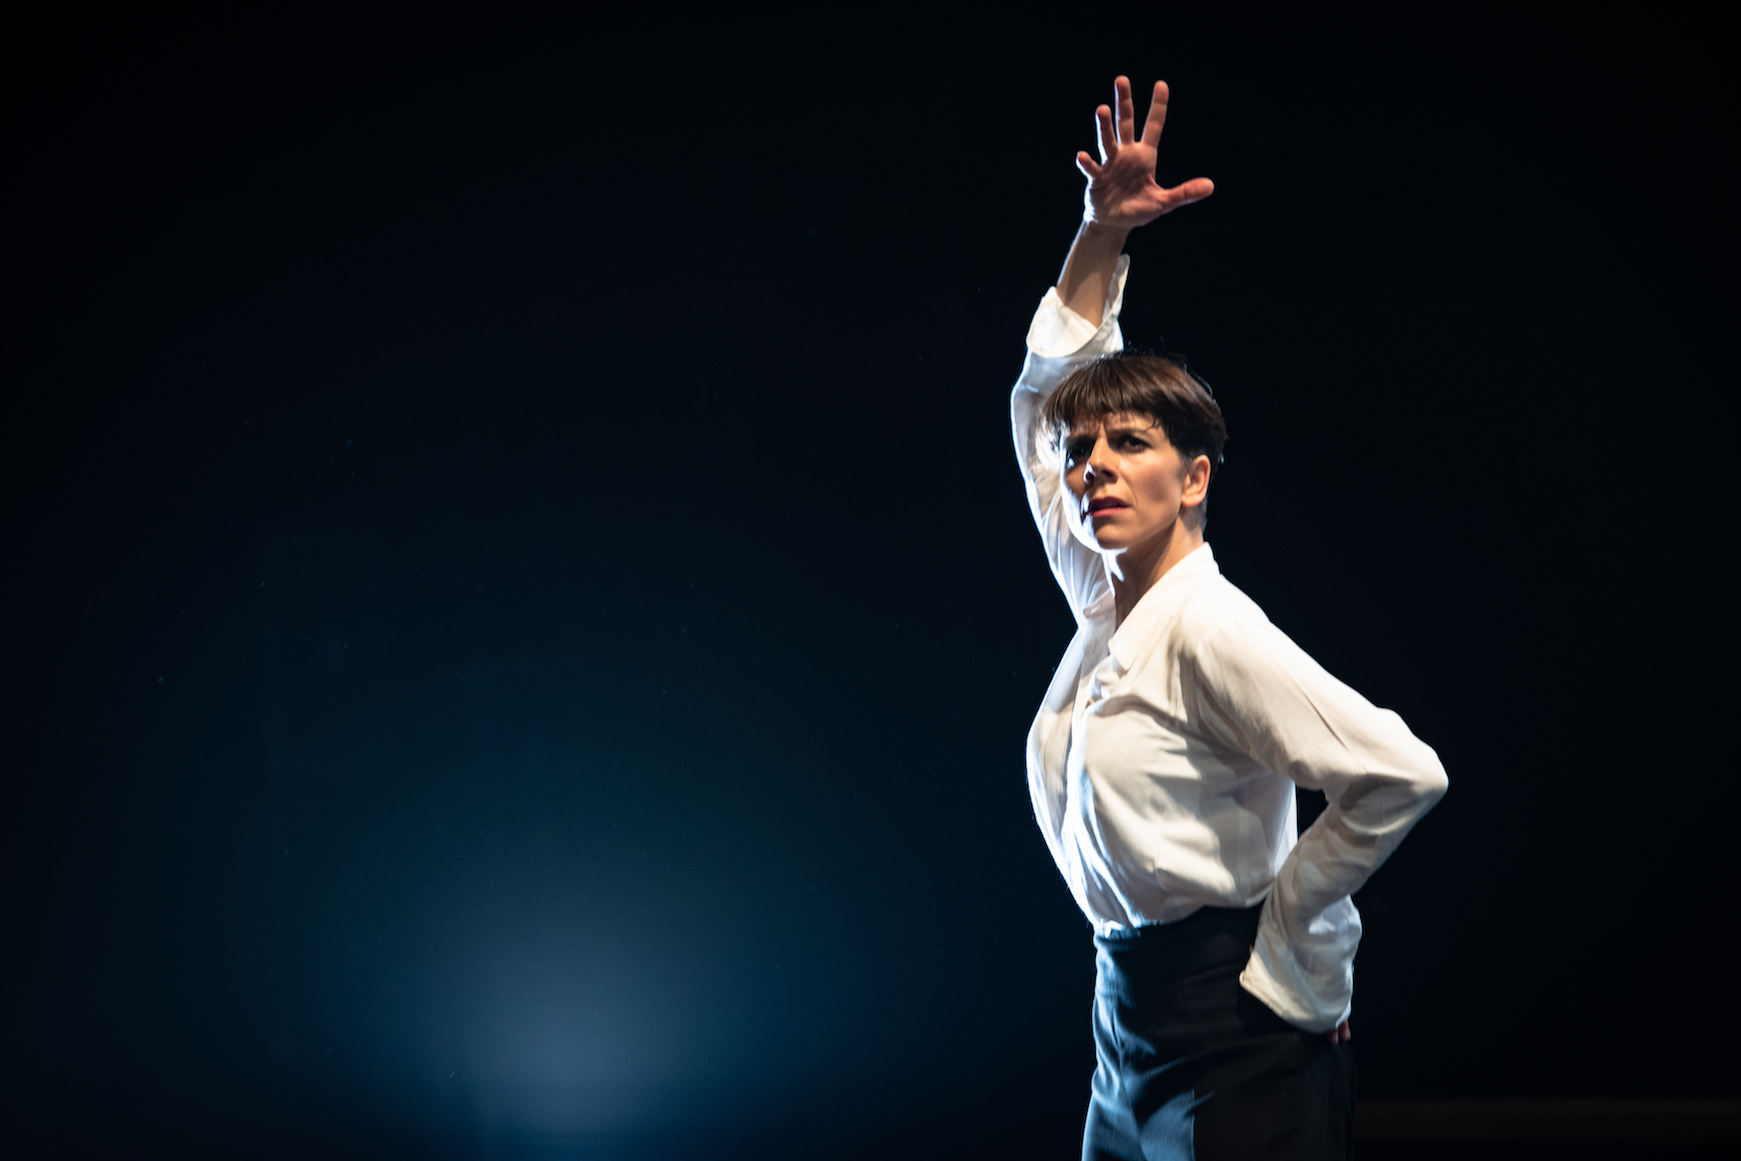 Flamenco-danseres Leonor Leal, op 20 januari 2019 in Theater Bellevue, Amsterdam. Flamenco-biënale